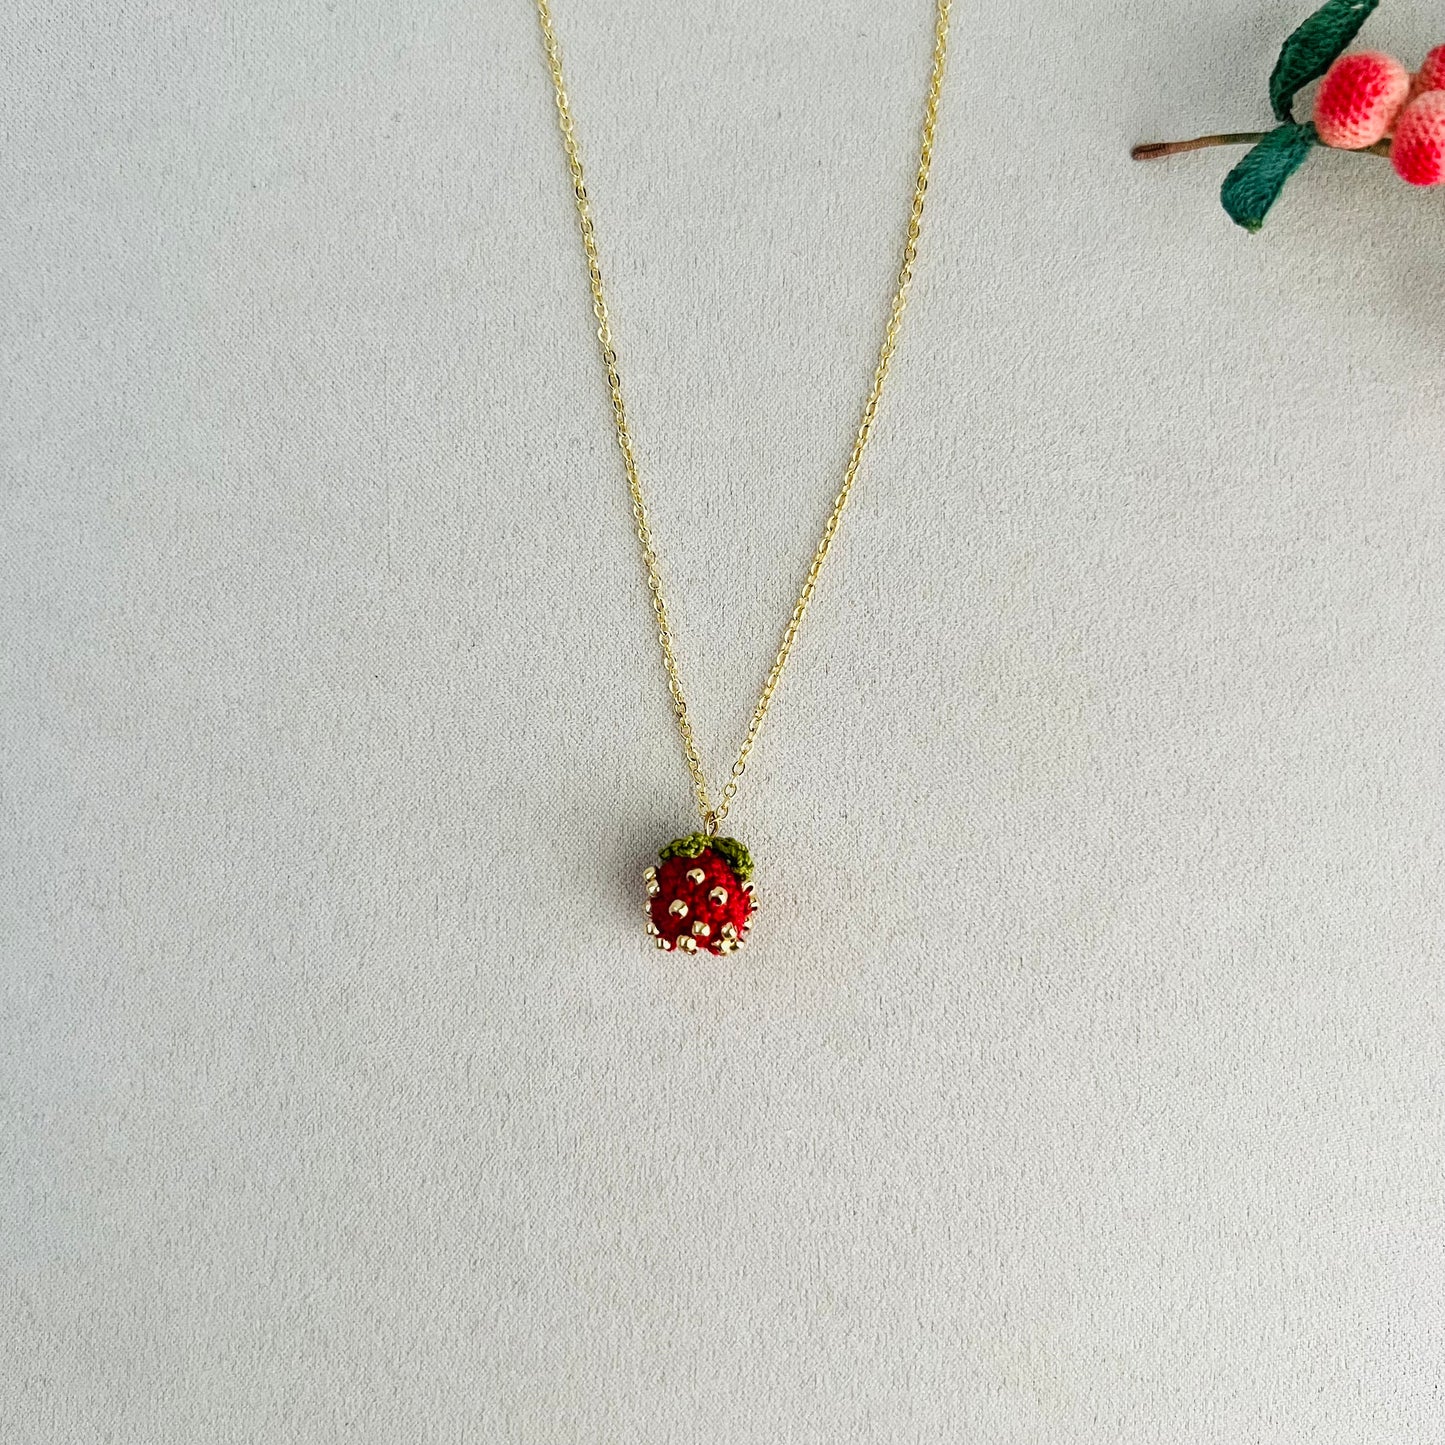 Strawberry Necklace | Crochet Strawberry Necklace | Handmade Fruit Jewelry